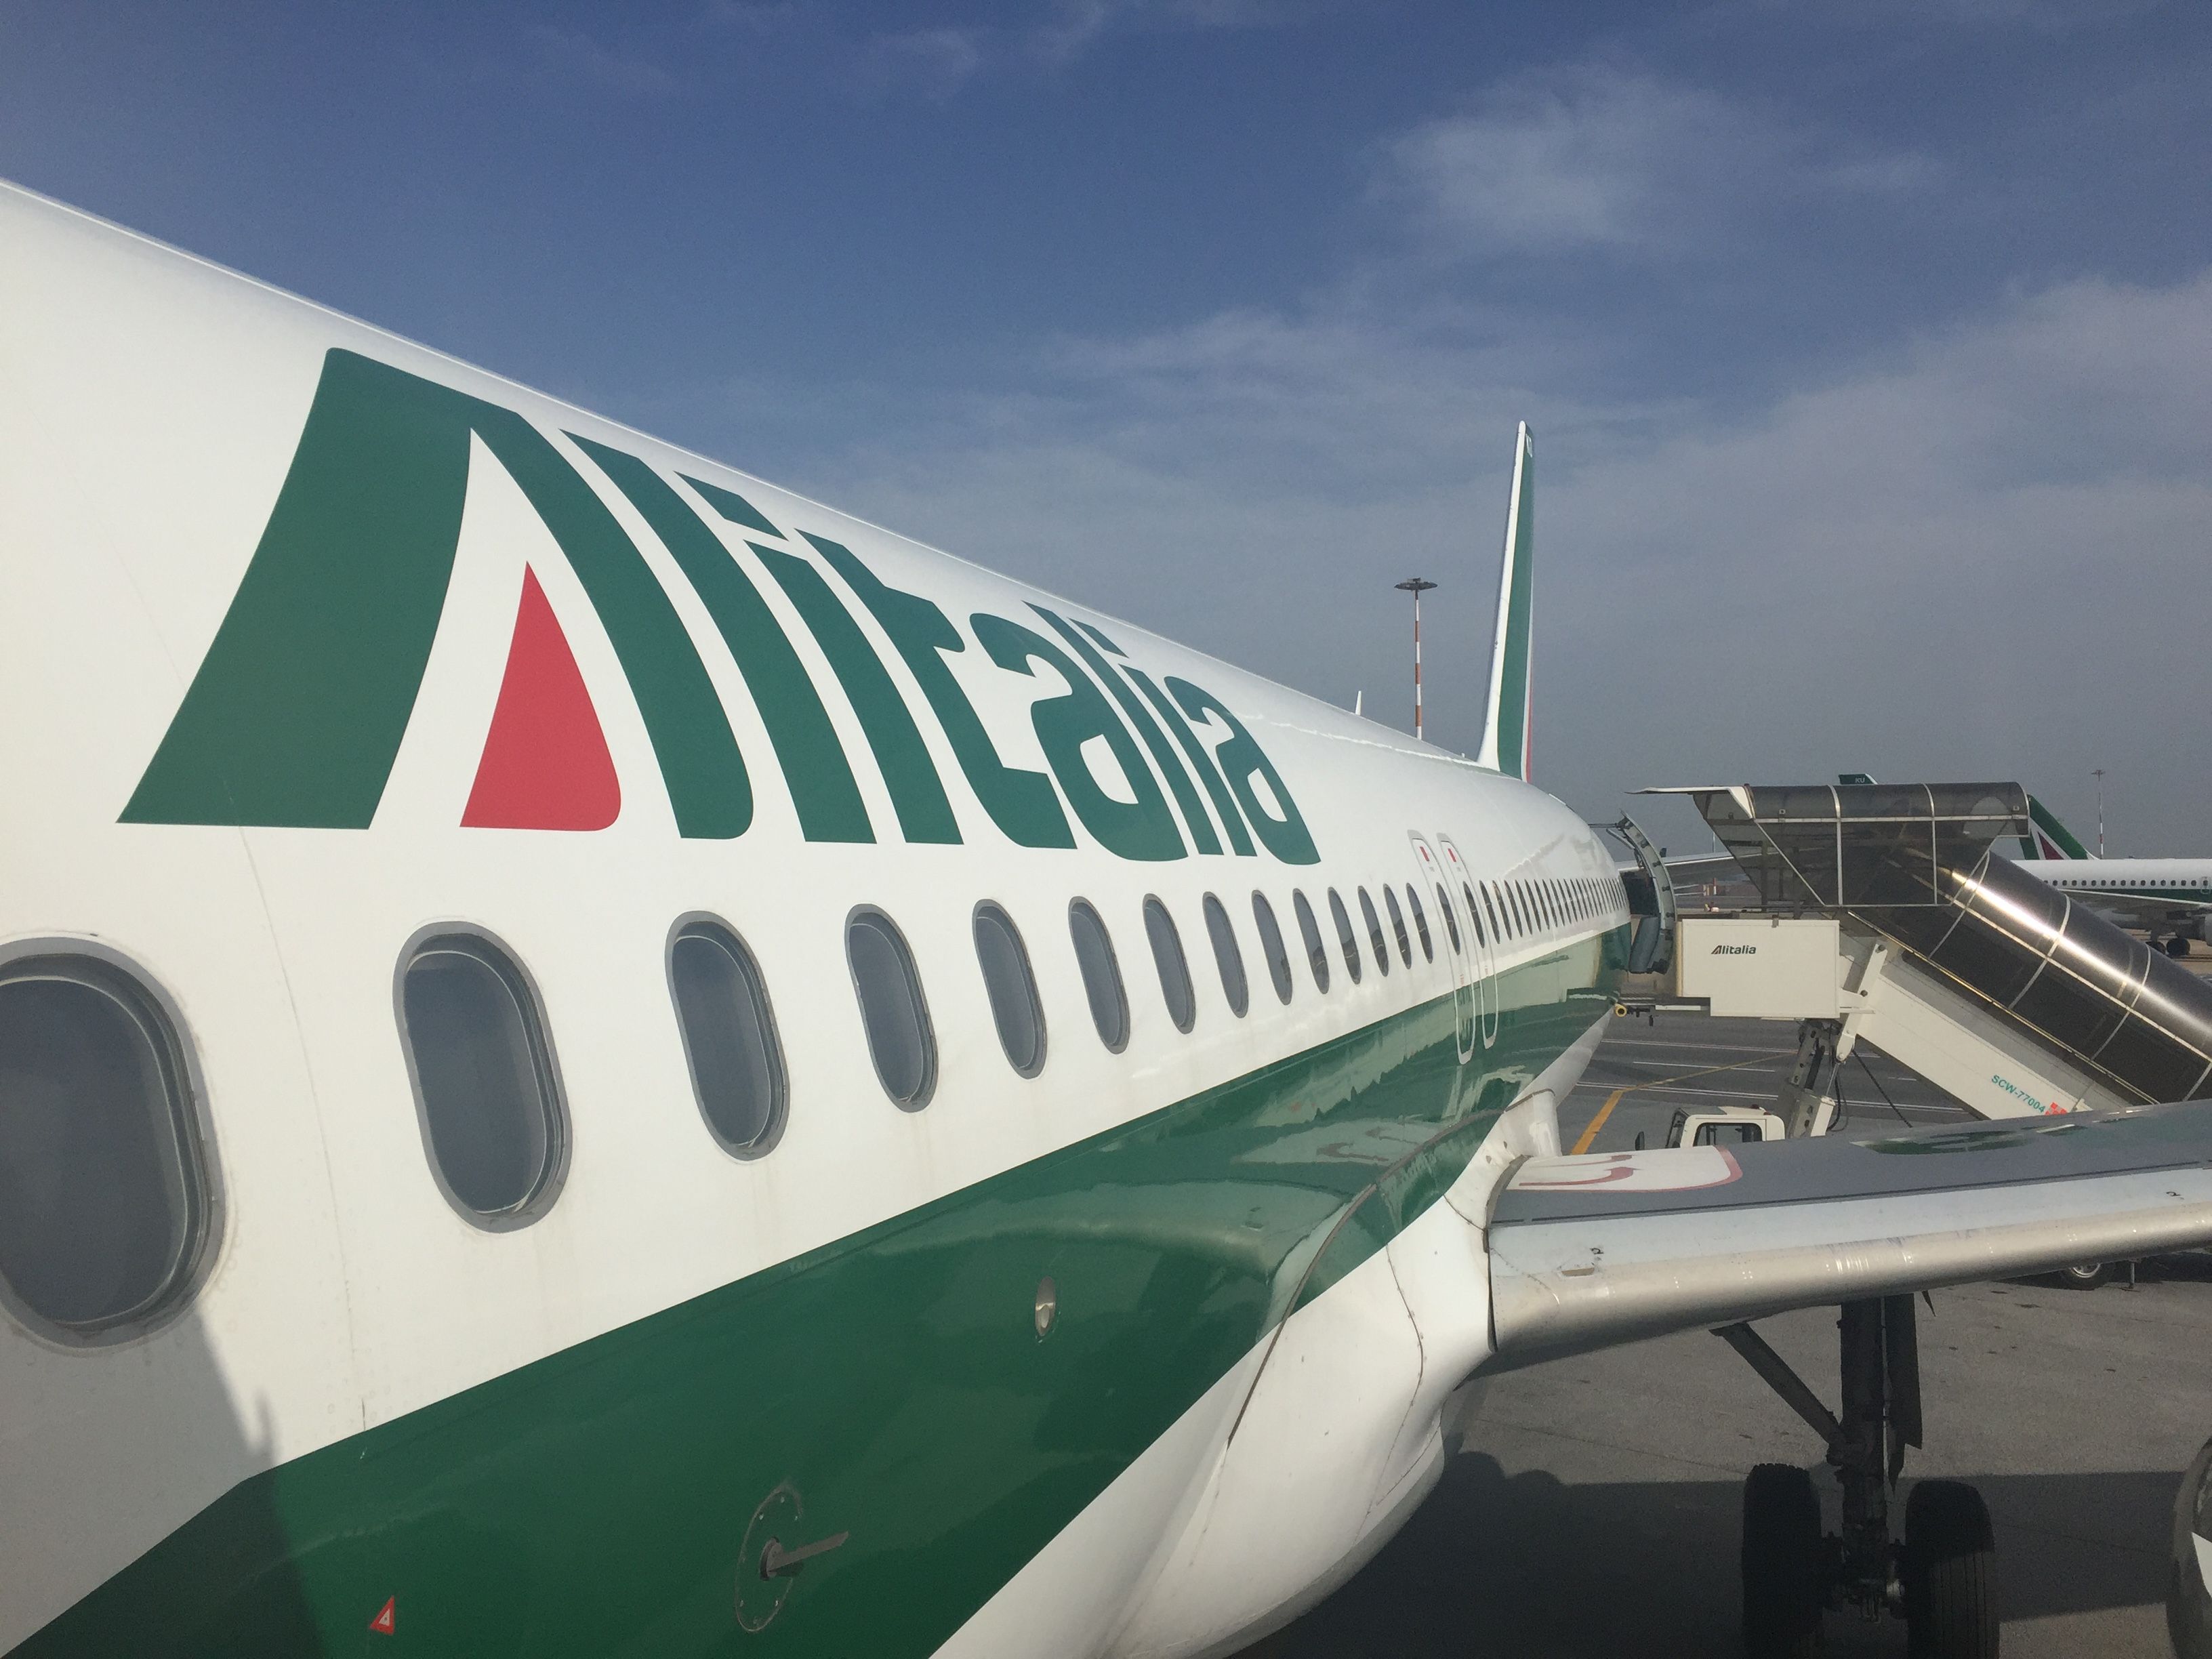 Aerei: scioperi Alitalia e Meridiana, in Sardegna saltano 22 voli